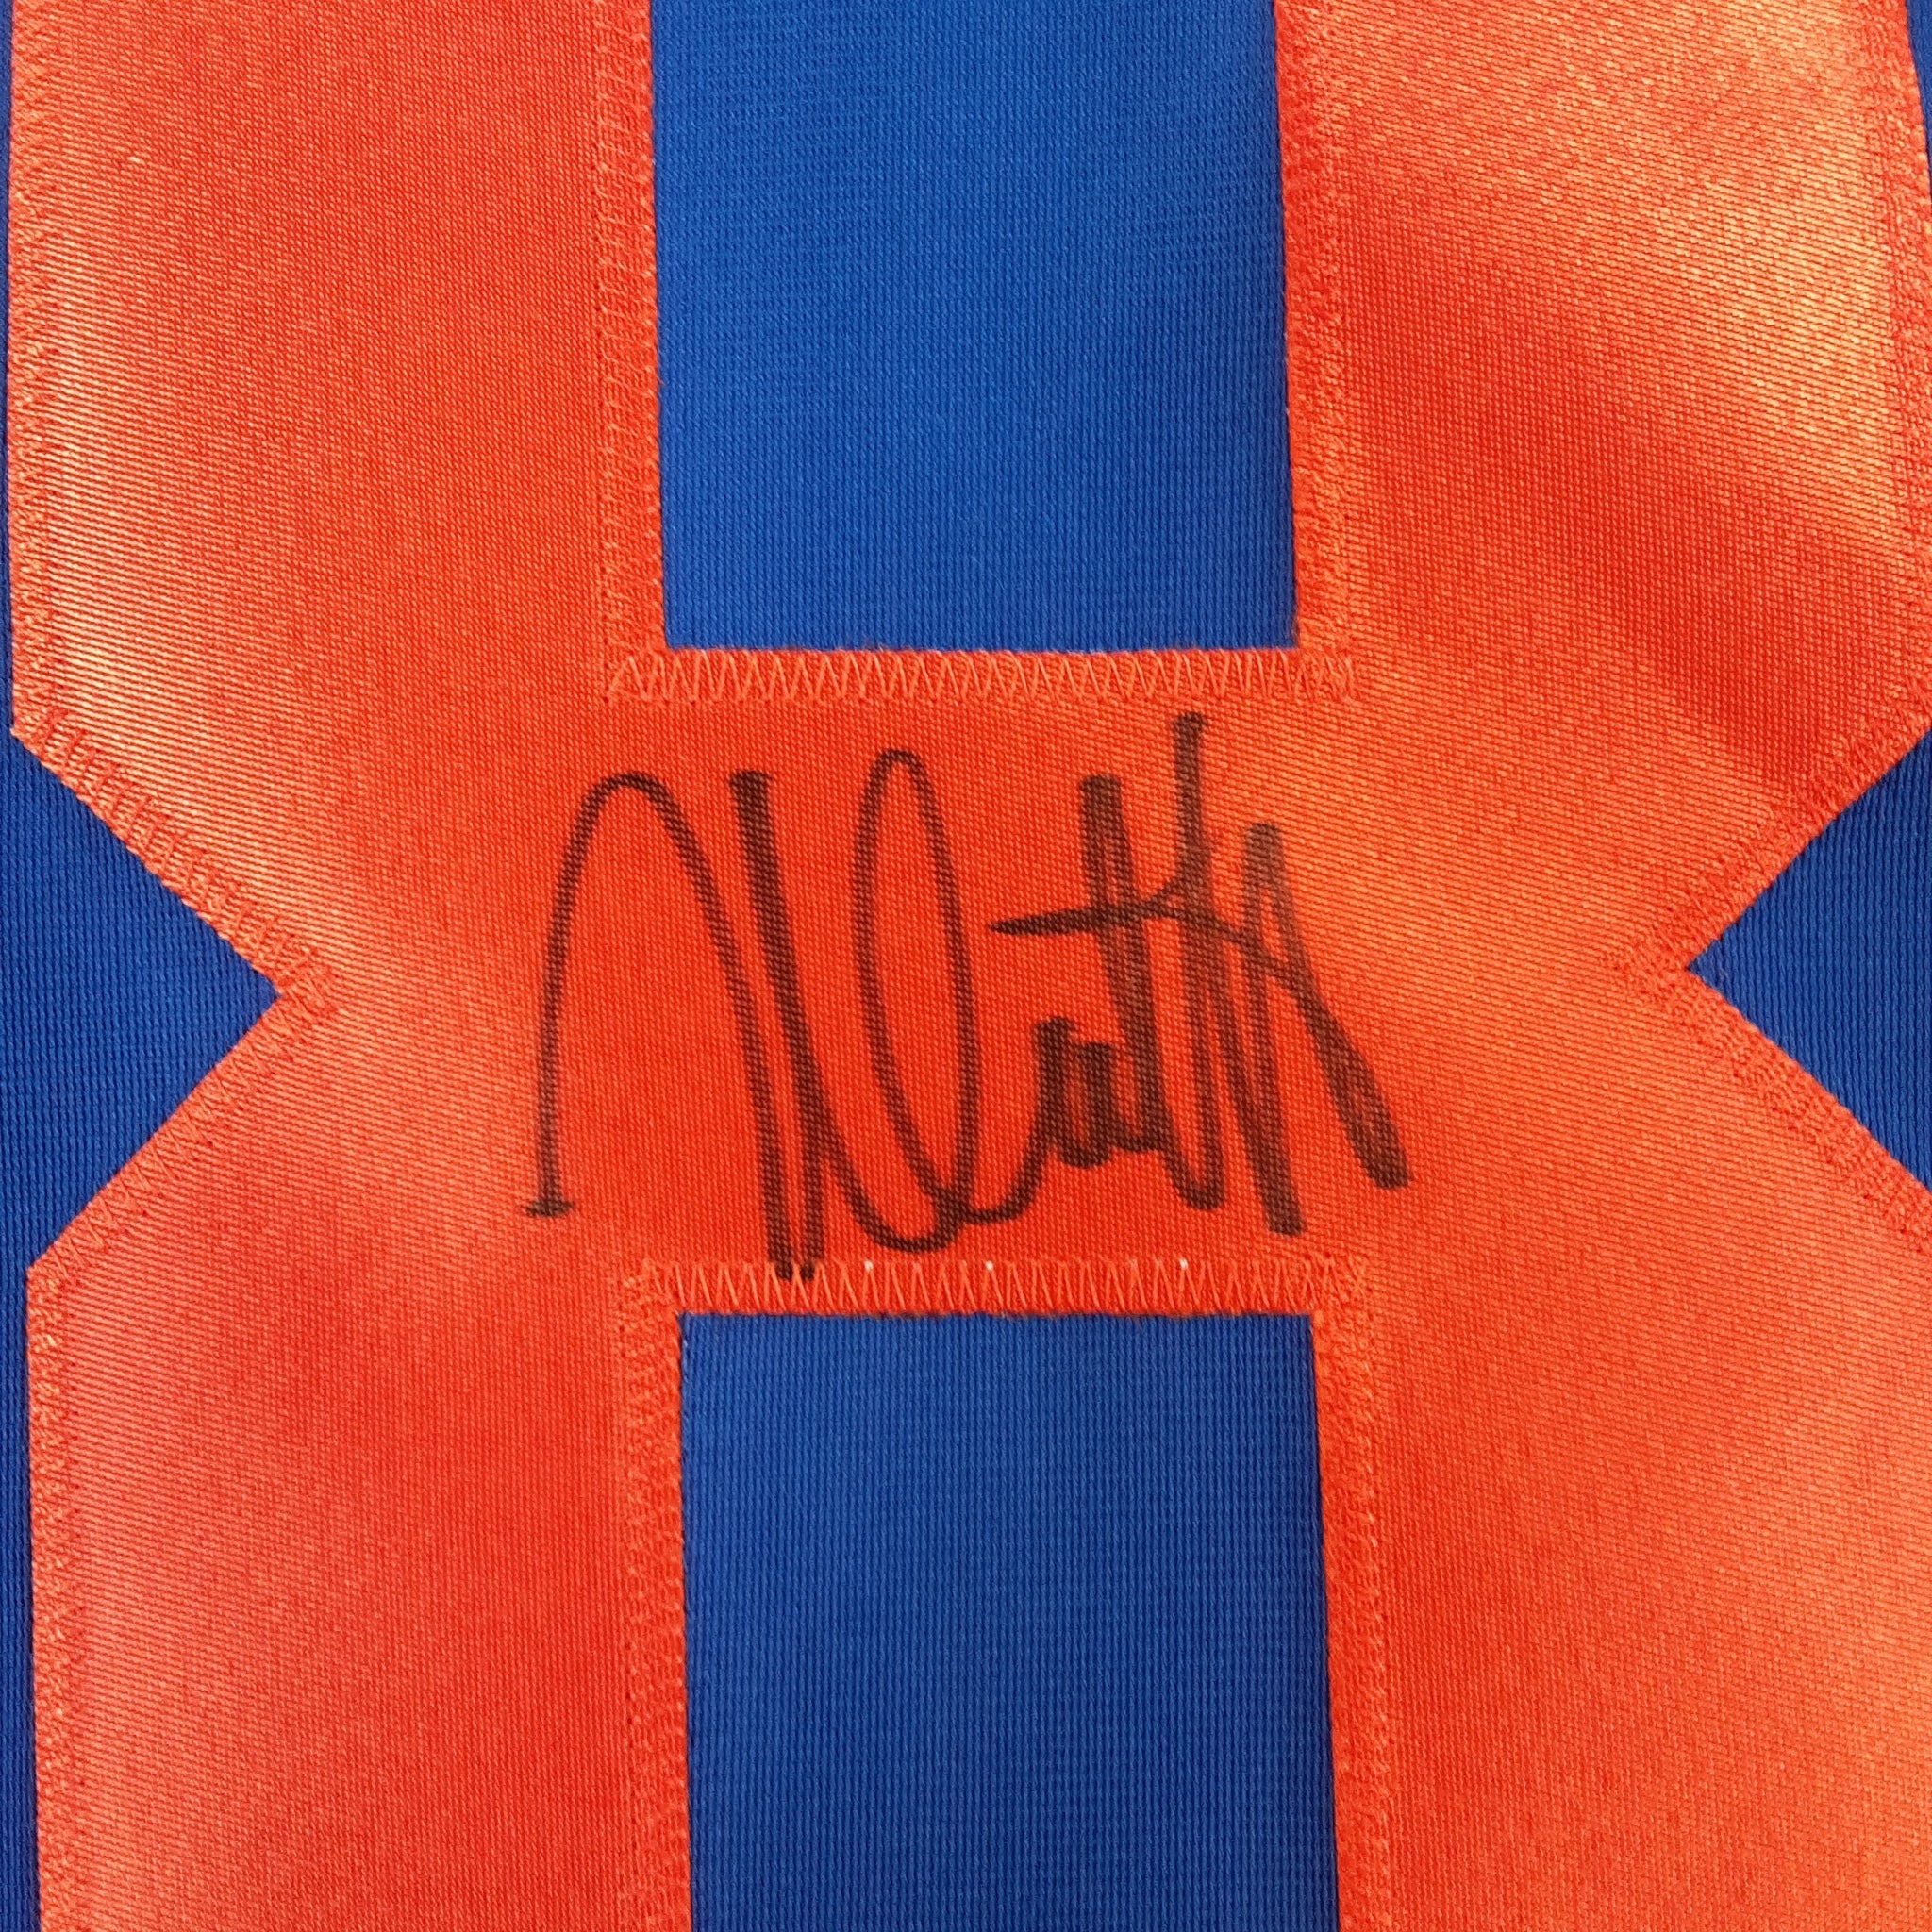 Nick Castle "Michael Myers" Authentic Signed Pro Style Jersey Autographed JSA